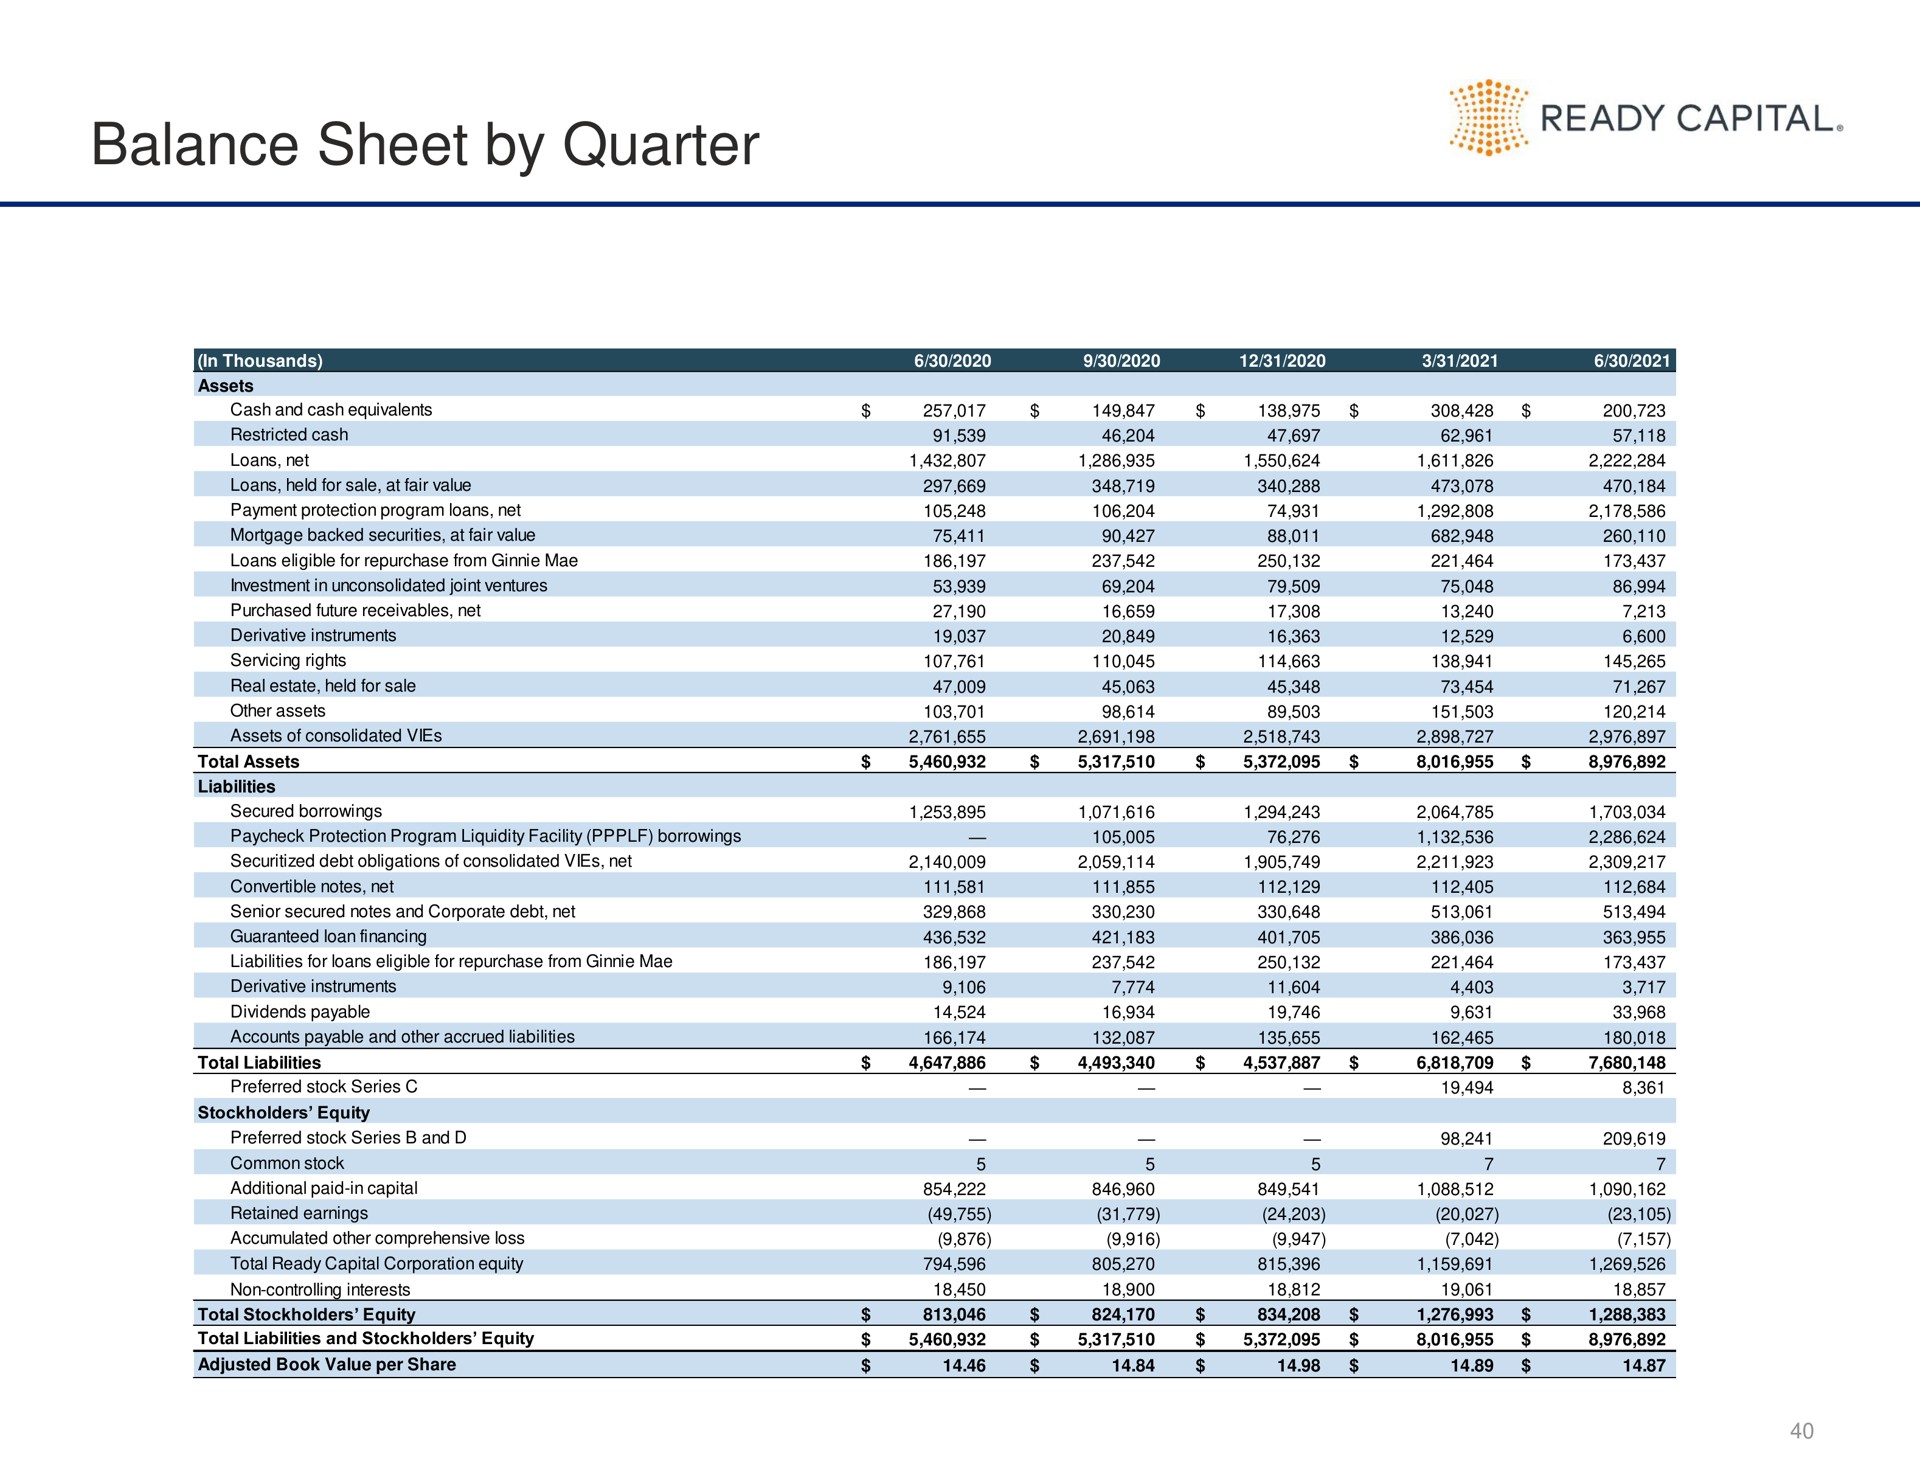 balance sheet by quarter | Ready Capital